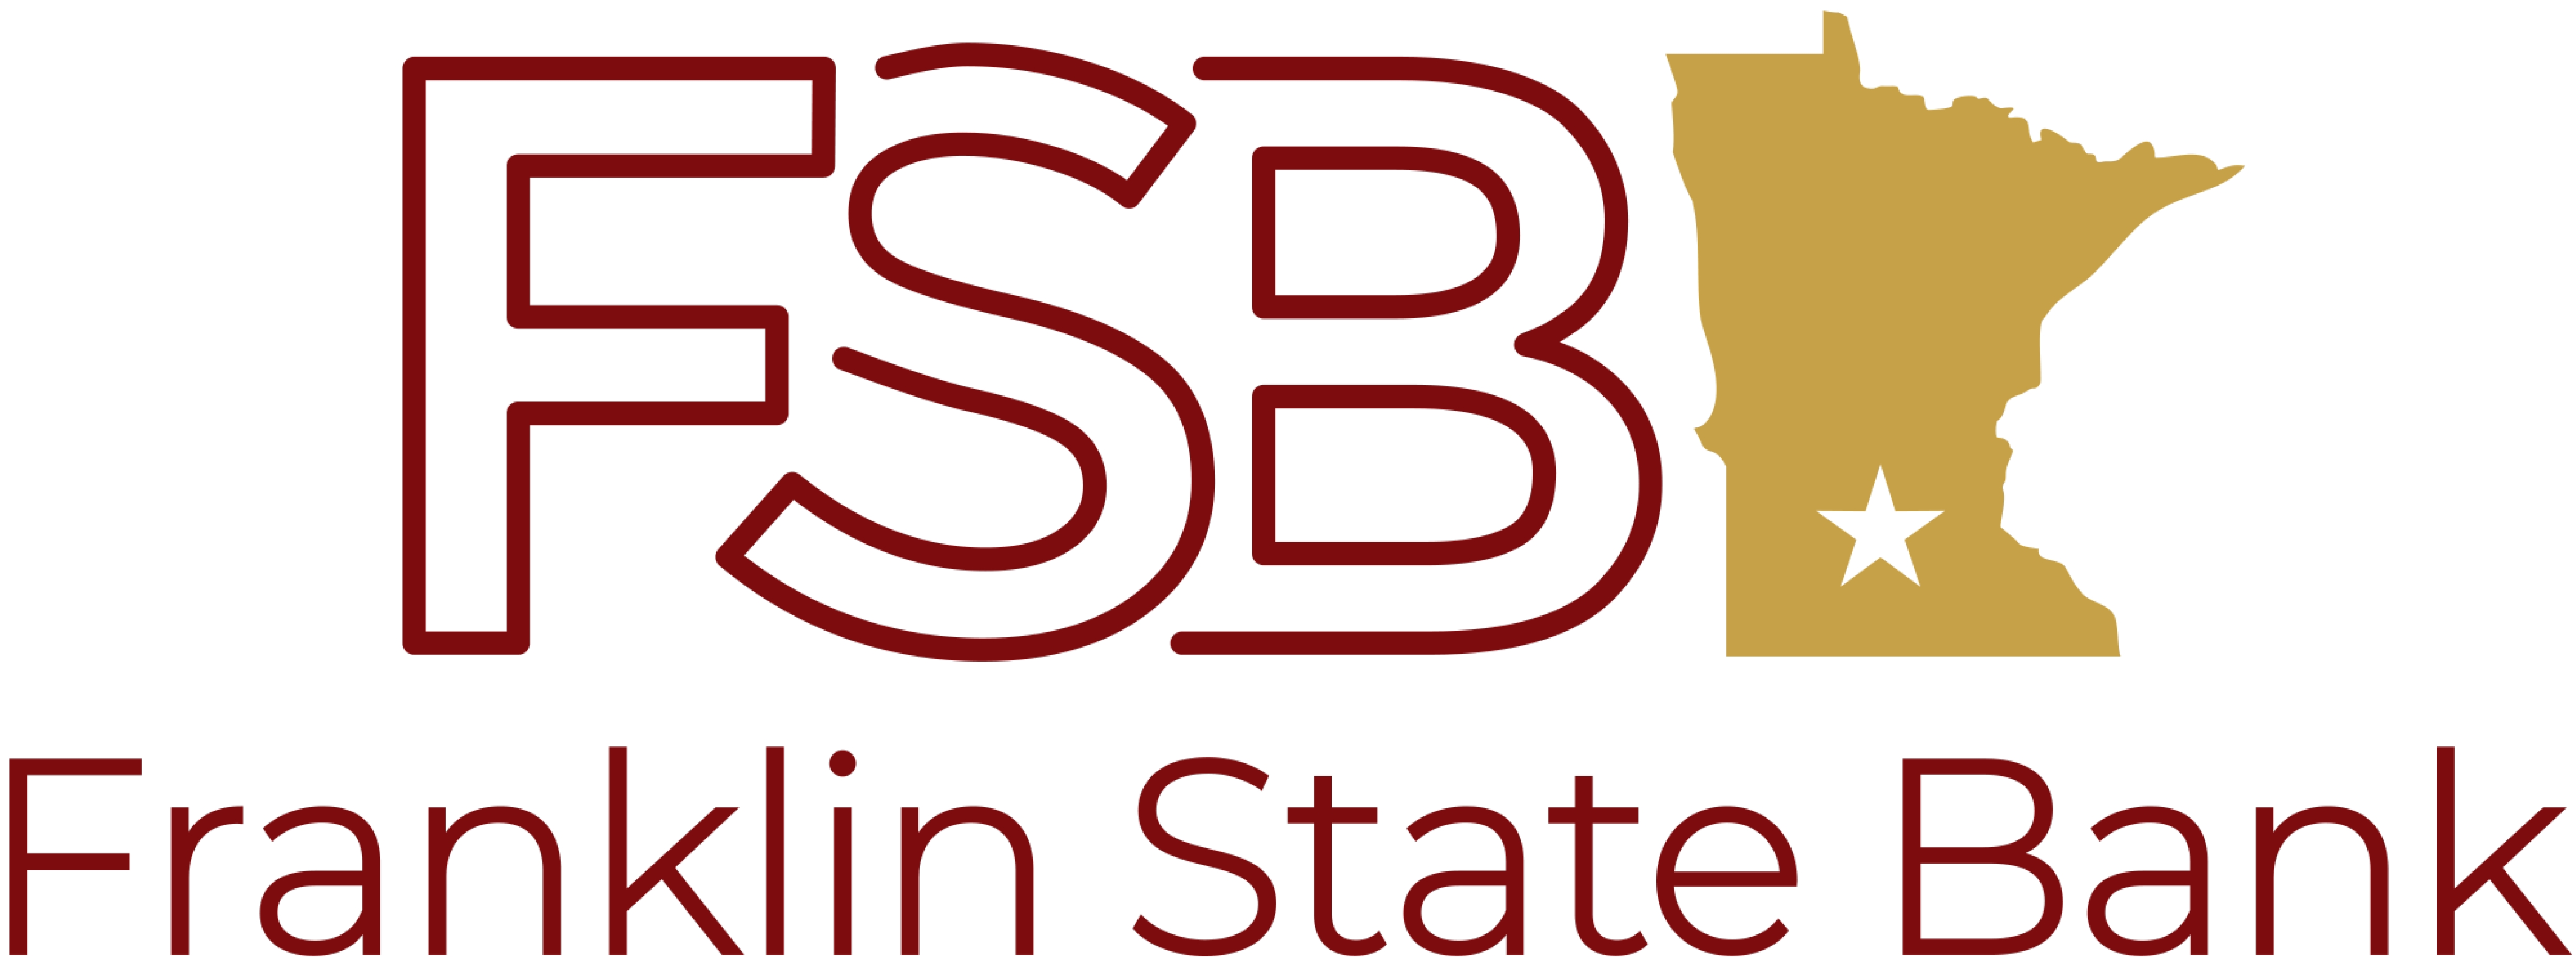 Franklin State Bank logo